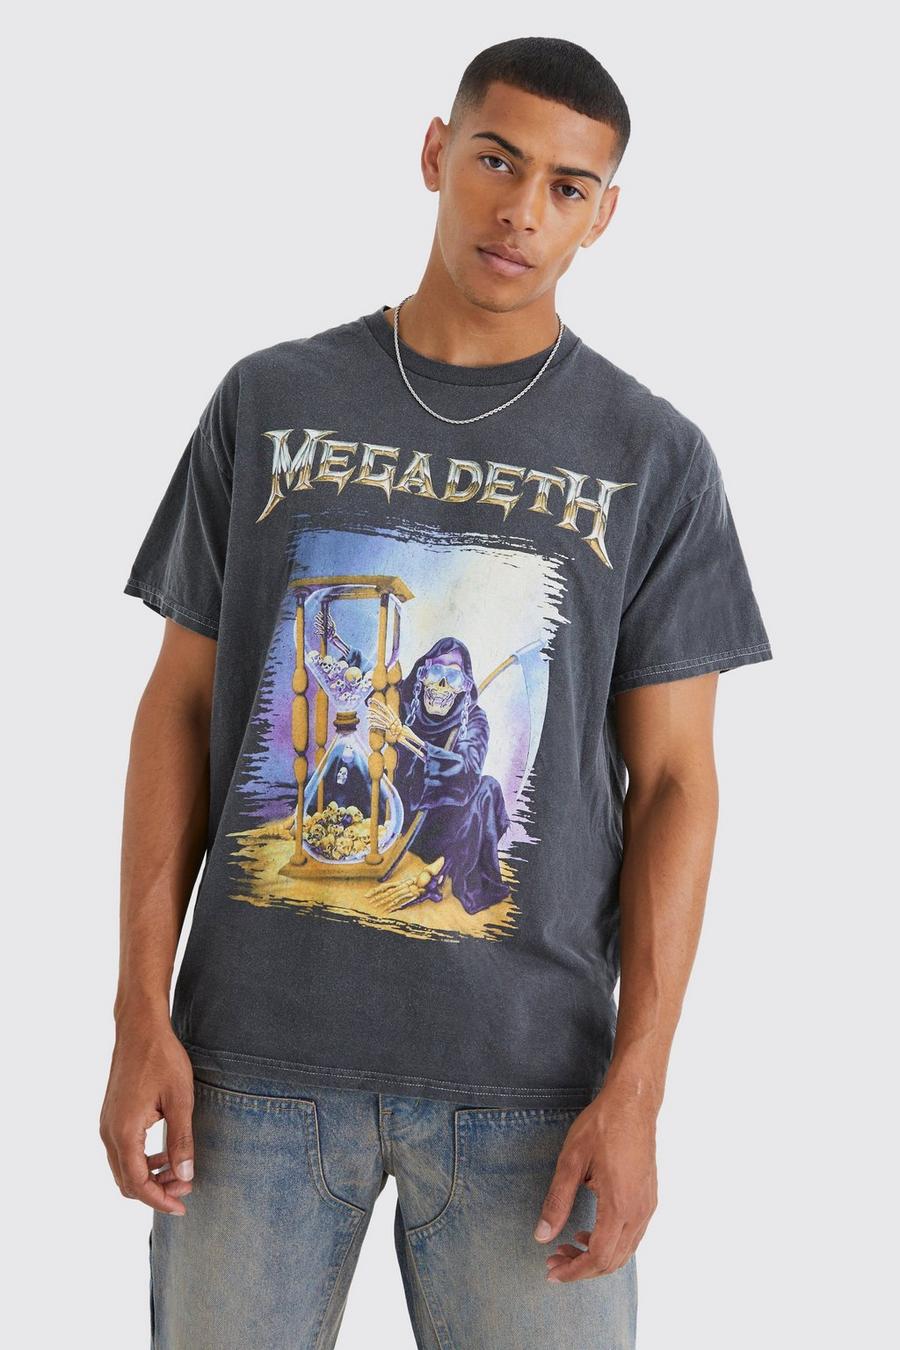 Charcoal grey Oversized Megadeth Overdye License T-shirt